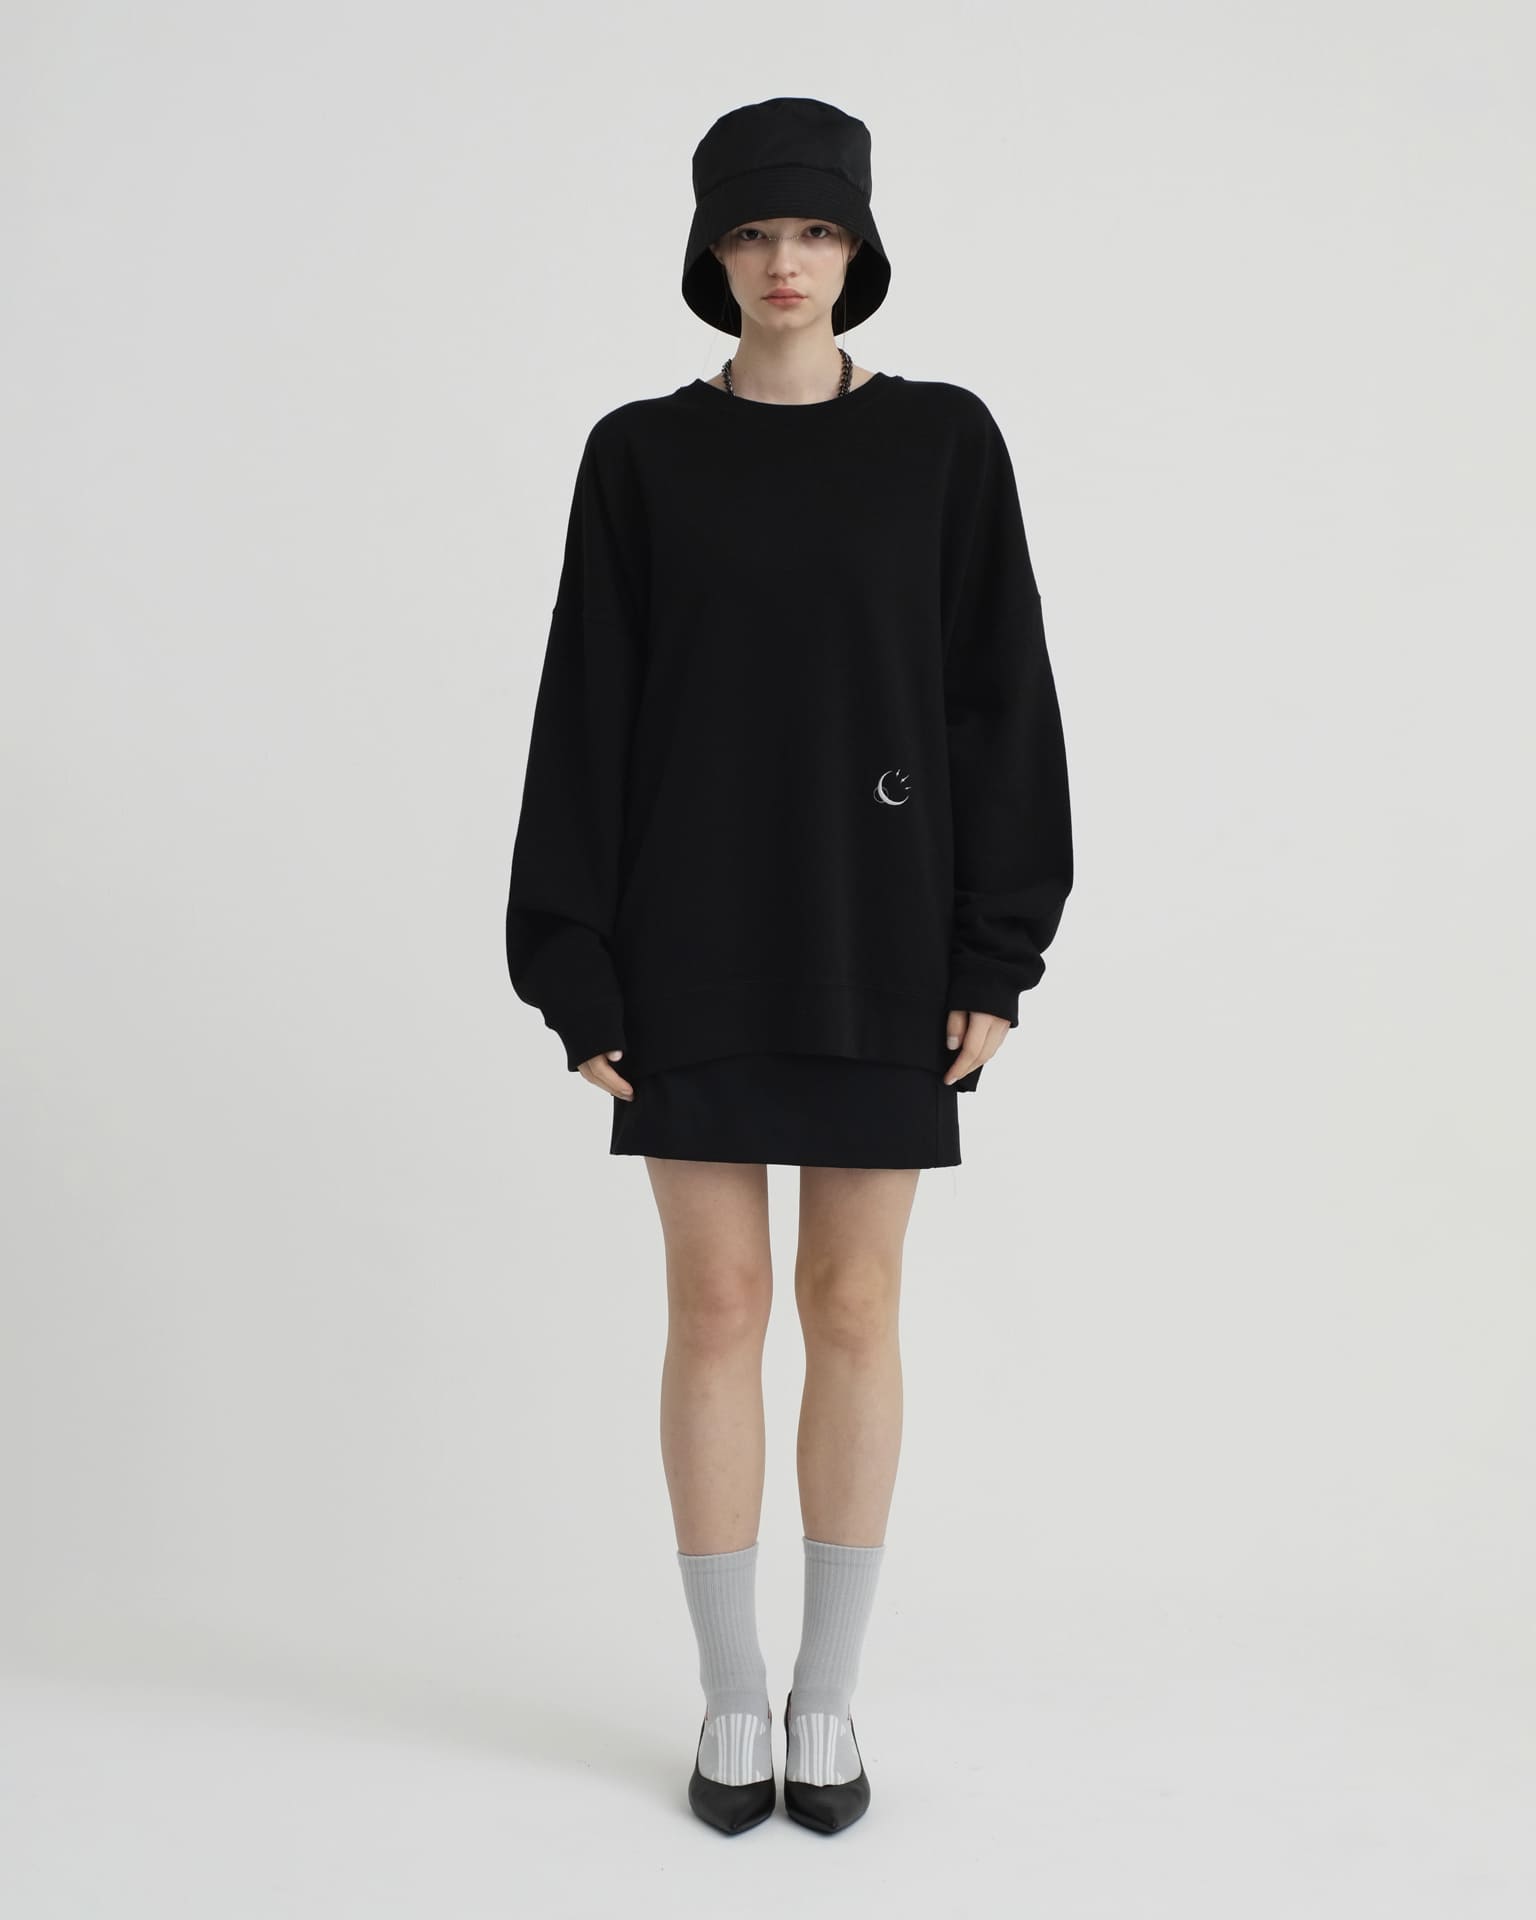 Spctra_Embroidered Sweatshirt Black